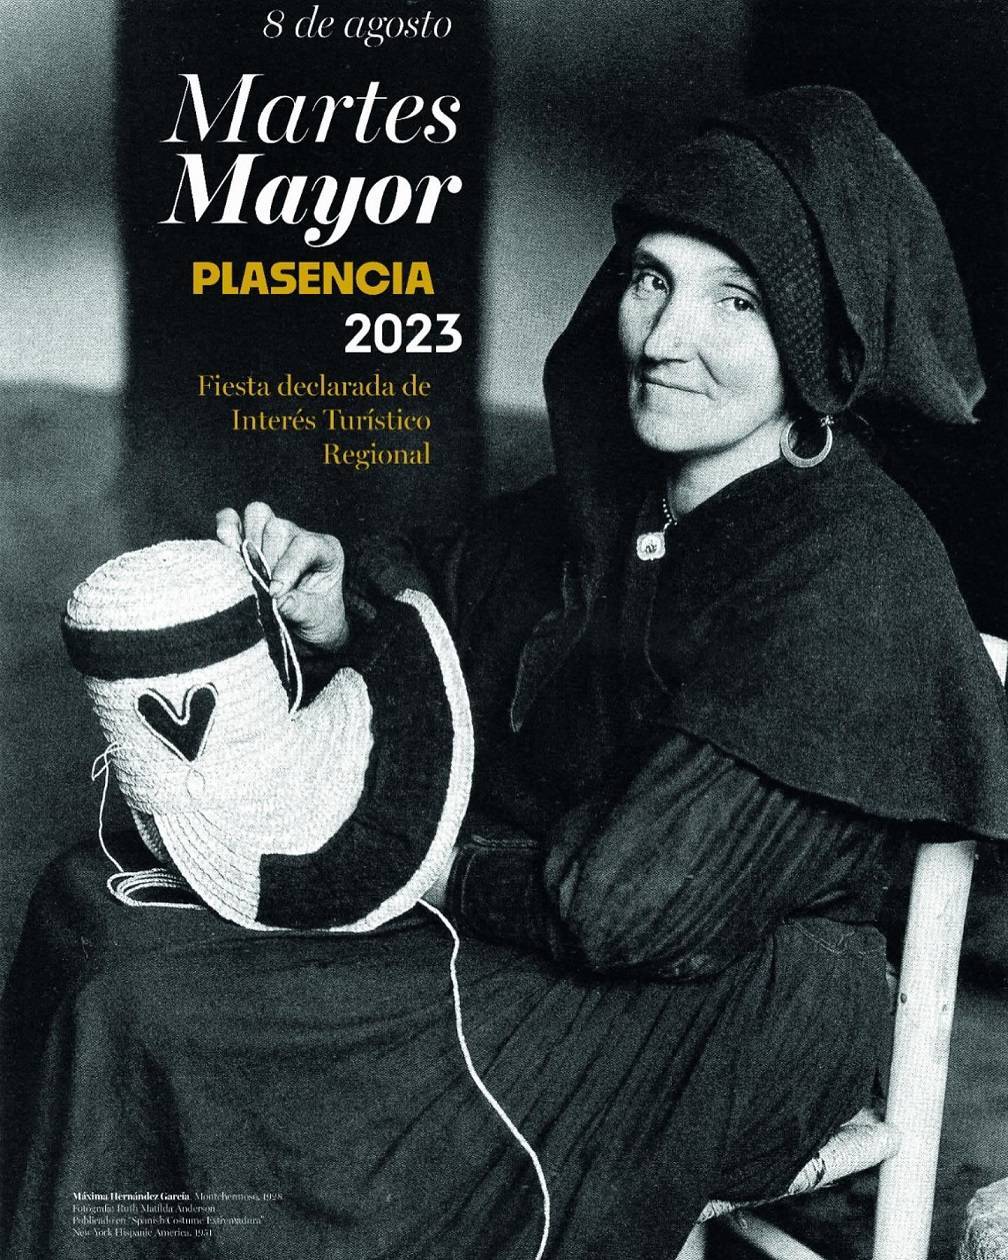 Martes Mayor (2023) - Plasencia (Cáceres)